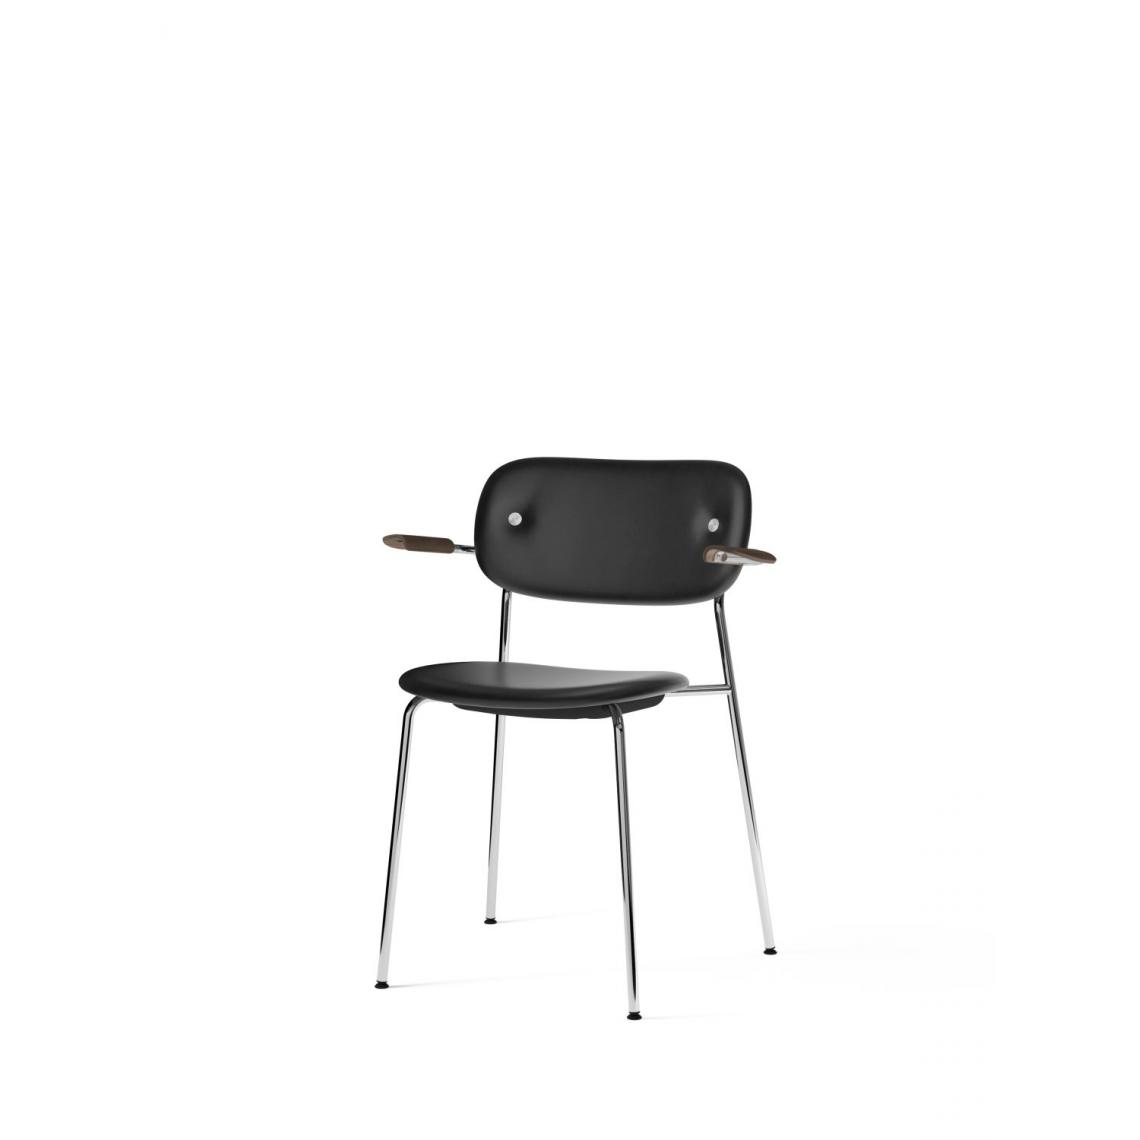 Menu - Co Dining Chair avec accoudoir - chrome - MenuCoChairDakar0842 - chêne, teinté foncé - Chaises